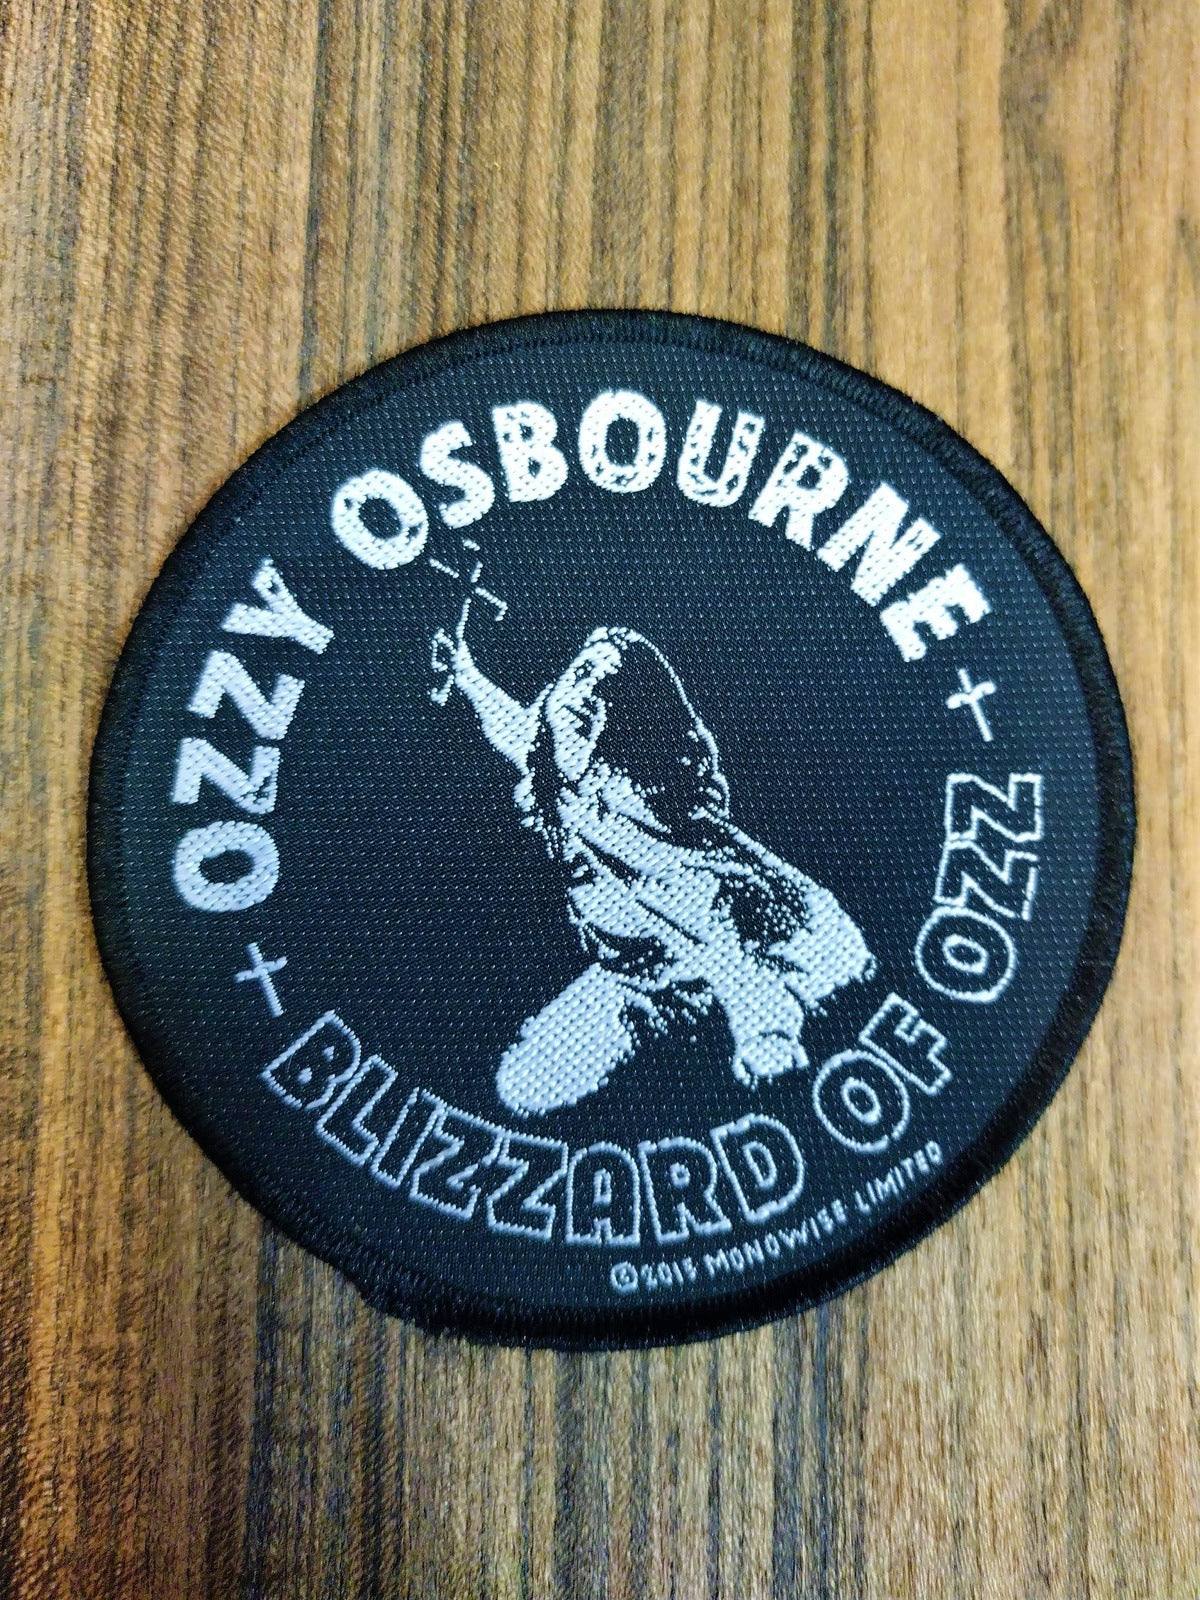 Ozzy Osbourne Blizzard of Ozz Patch approx. 3.5 inches